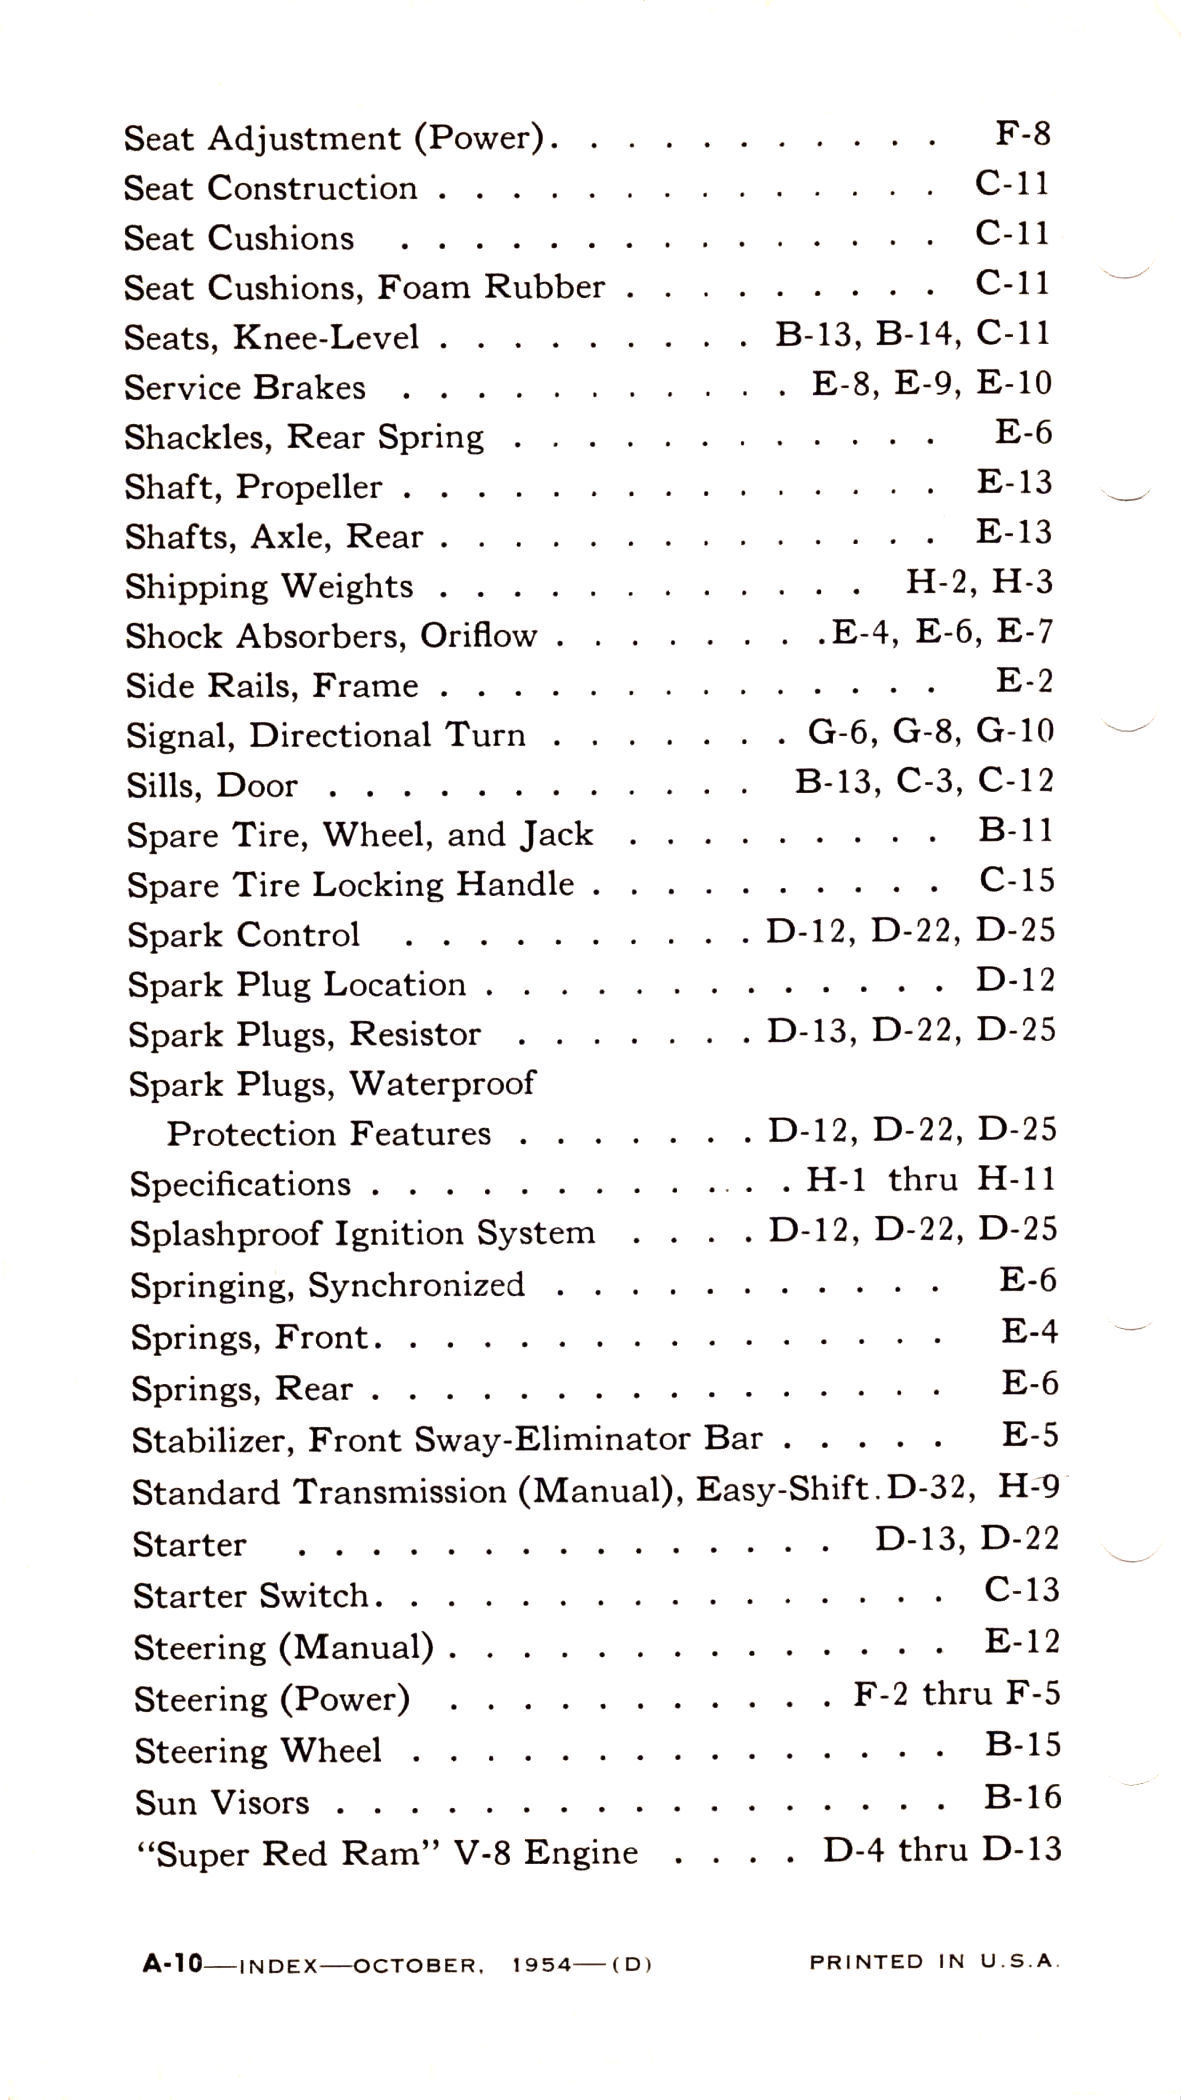 1955_Dodge_Data_Book-A10